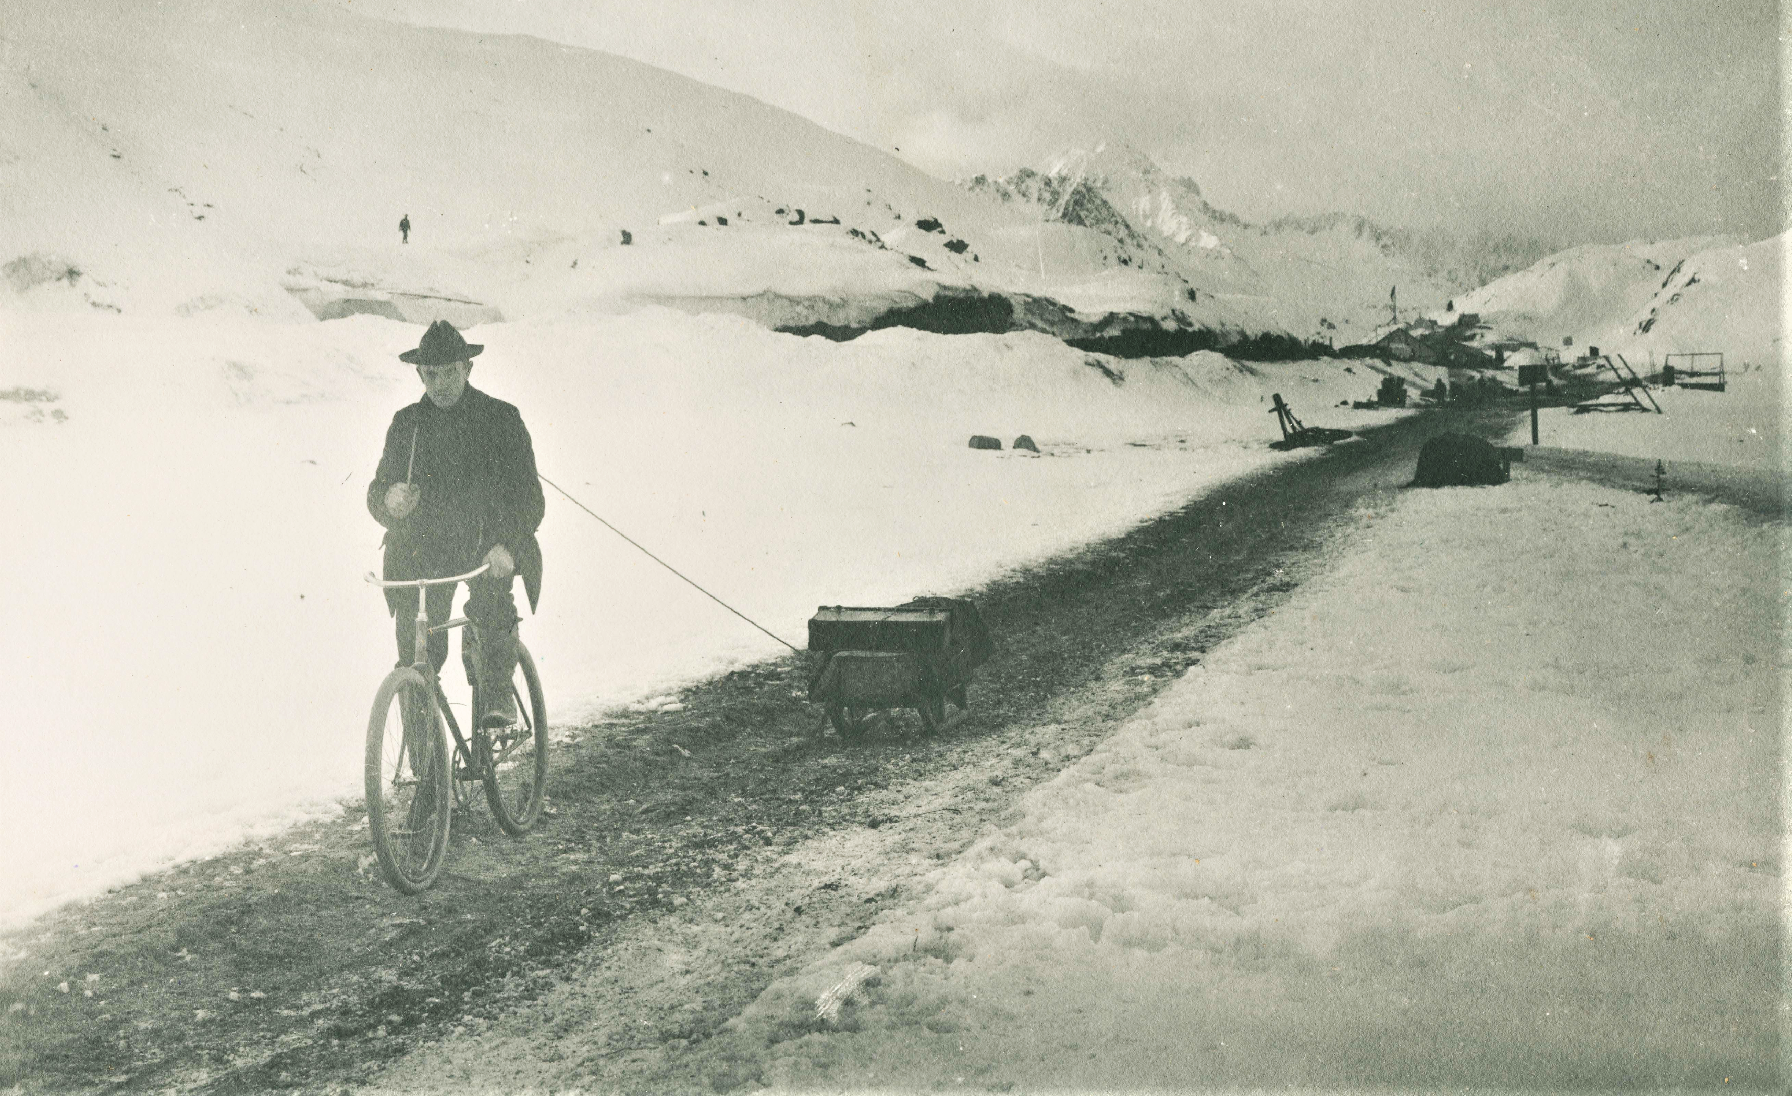 Arthur Pillsbury riding his bike at White Pass above Skagway, Alaska in winter